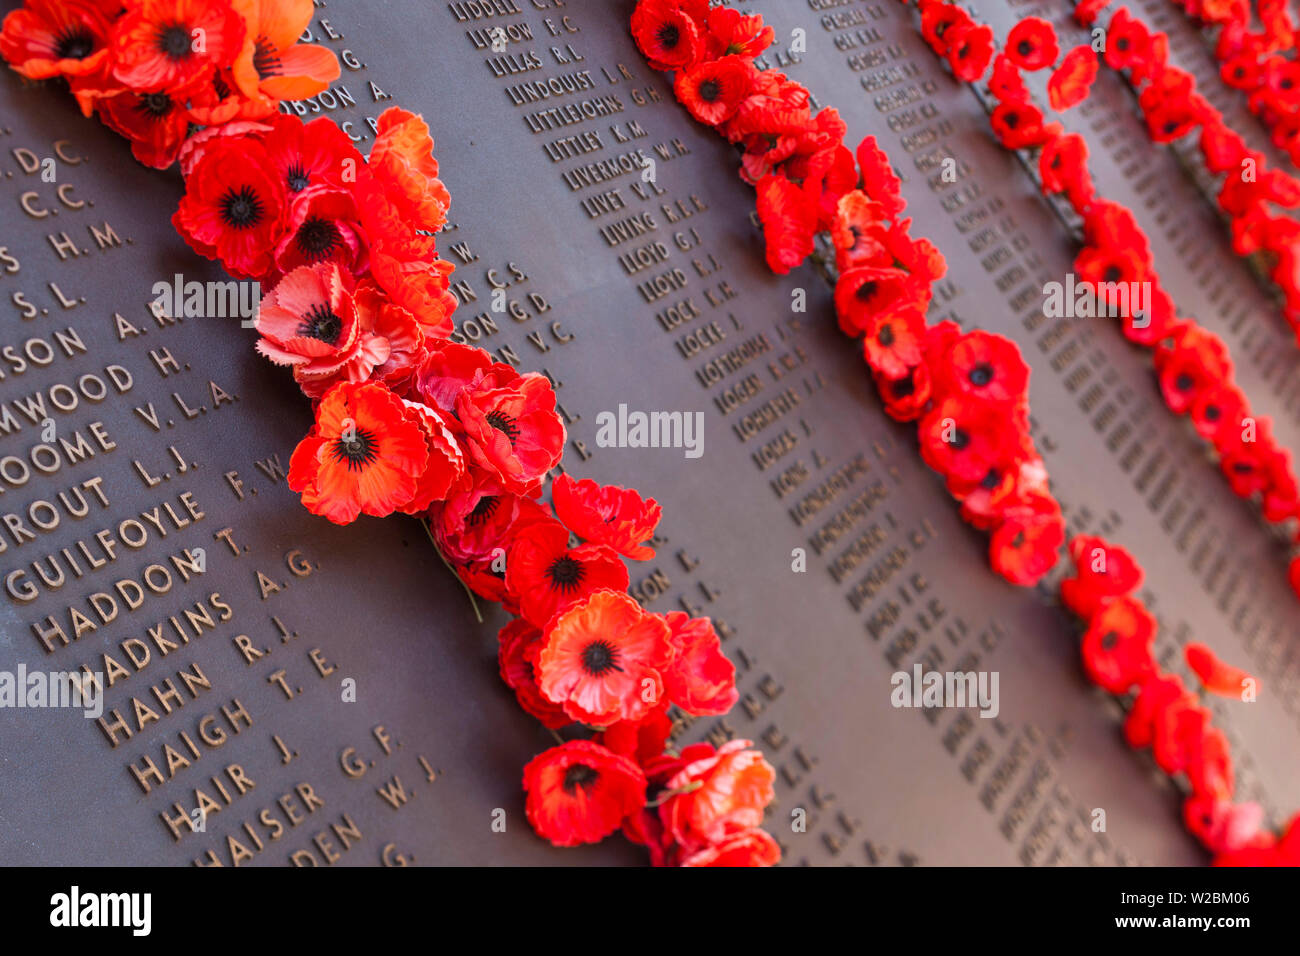 Australien, Australian Capital Territory, ACT, Canberra, Australian War Memorial, Hall of Memory, Mohnblumen auf Listen der gefallenen australischen Soldaten Stockfoto